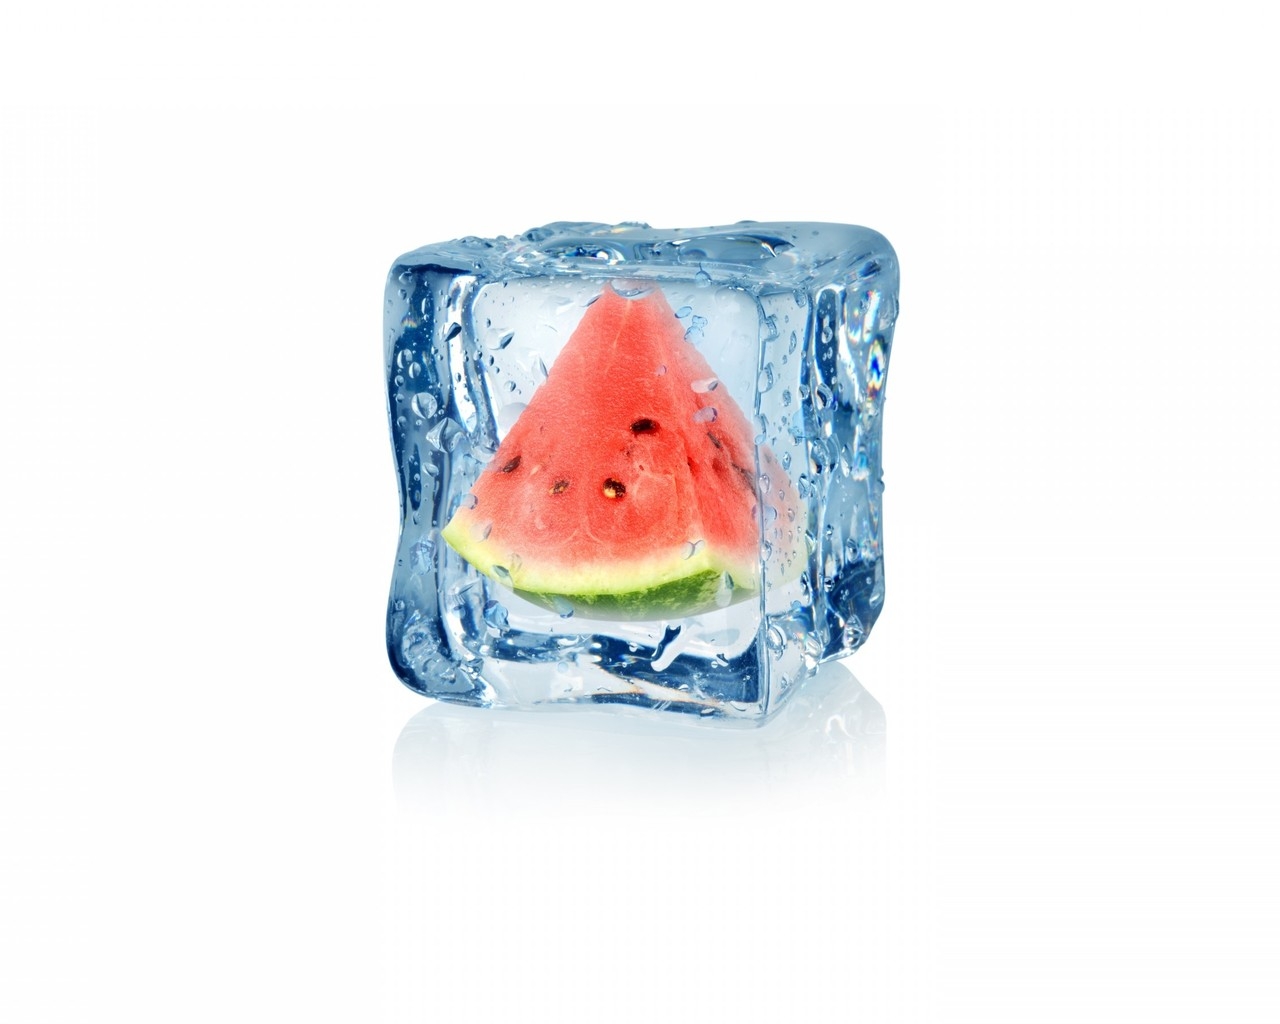 Frozen Watermelon  for 1280 x 1024 resolution